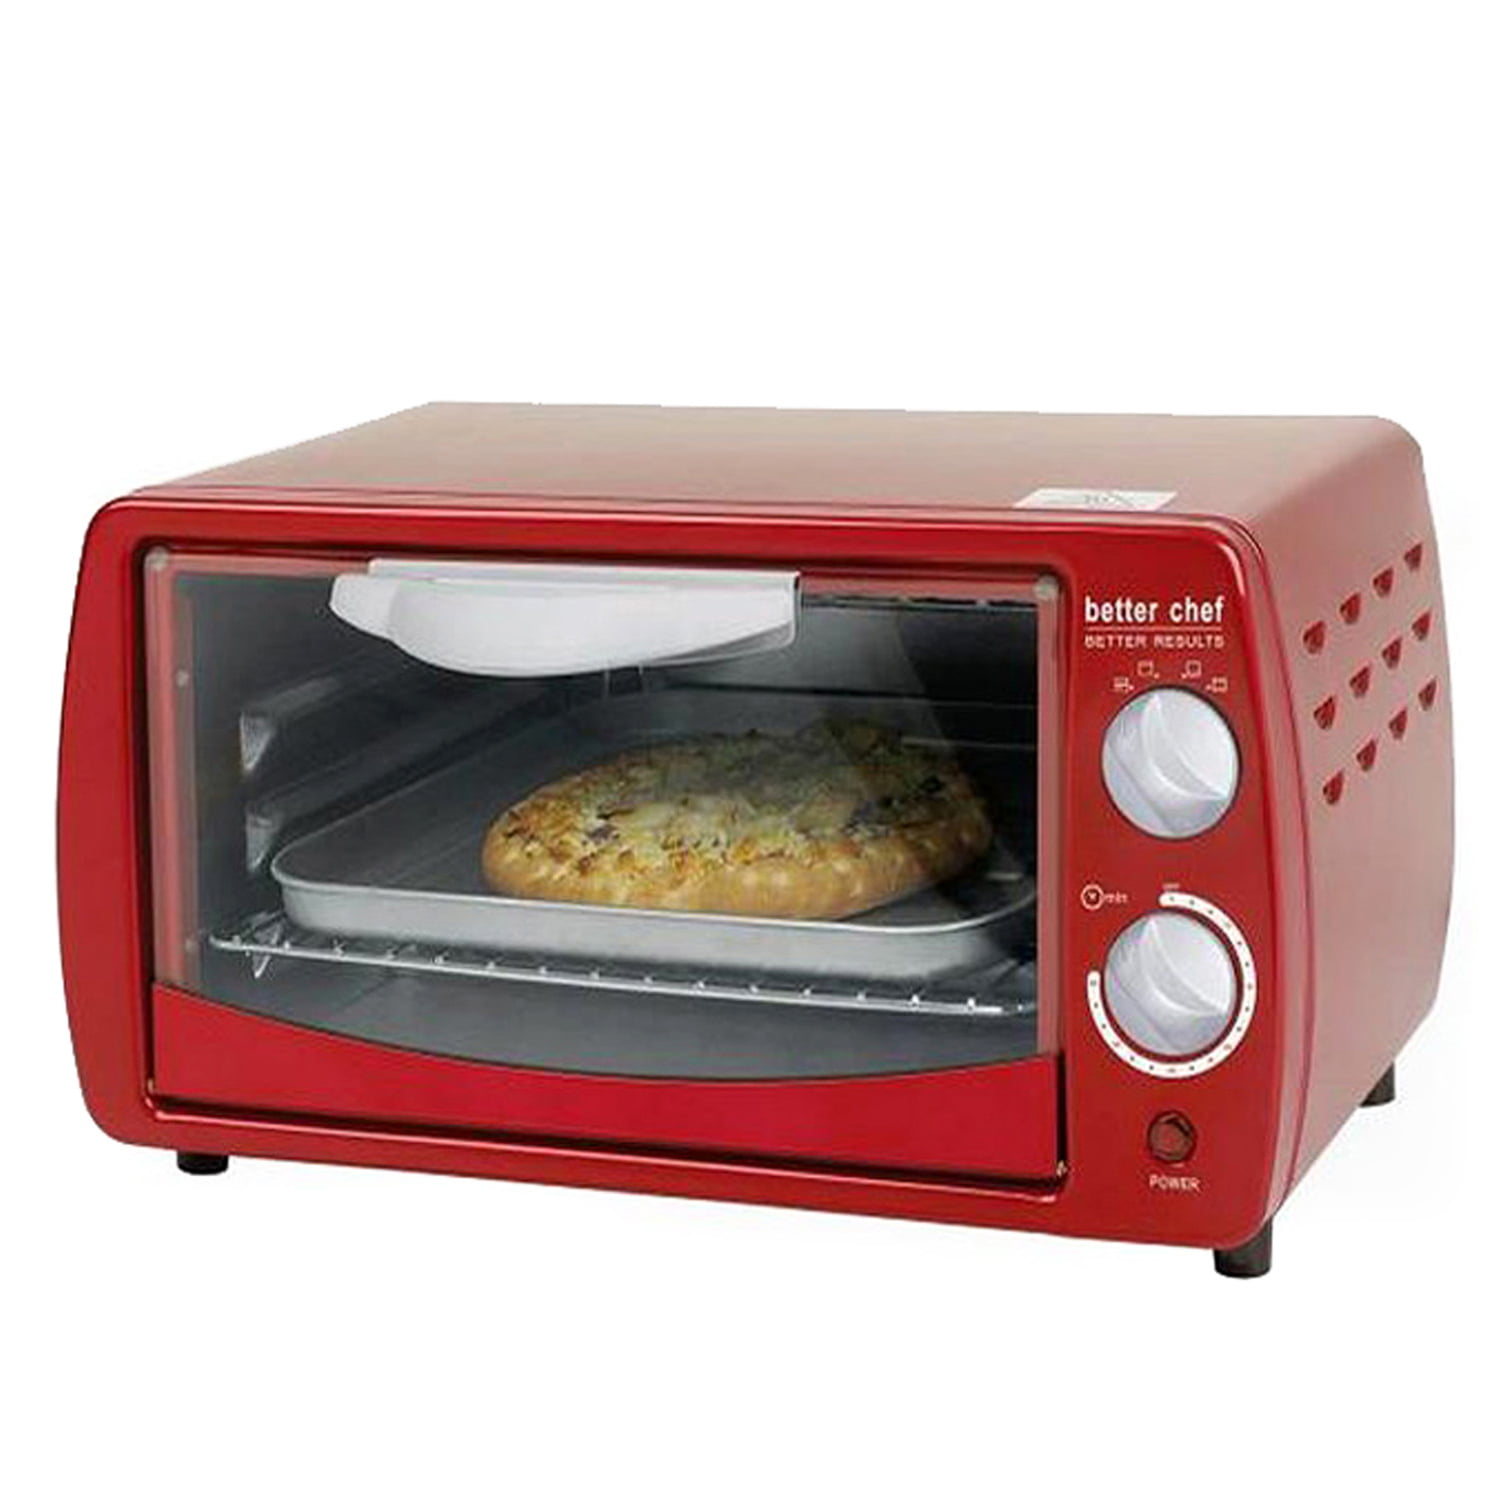 Better Chef Classic Red 9-liter Toaster Oven - Walmart.com - Walmart.com